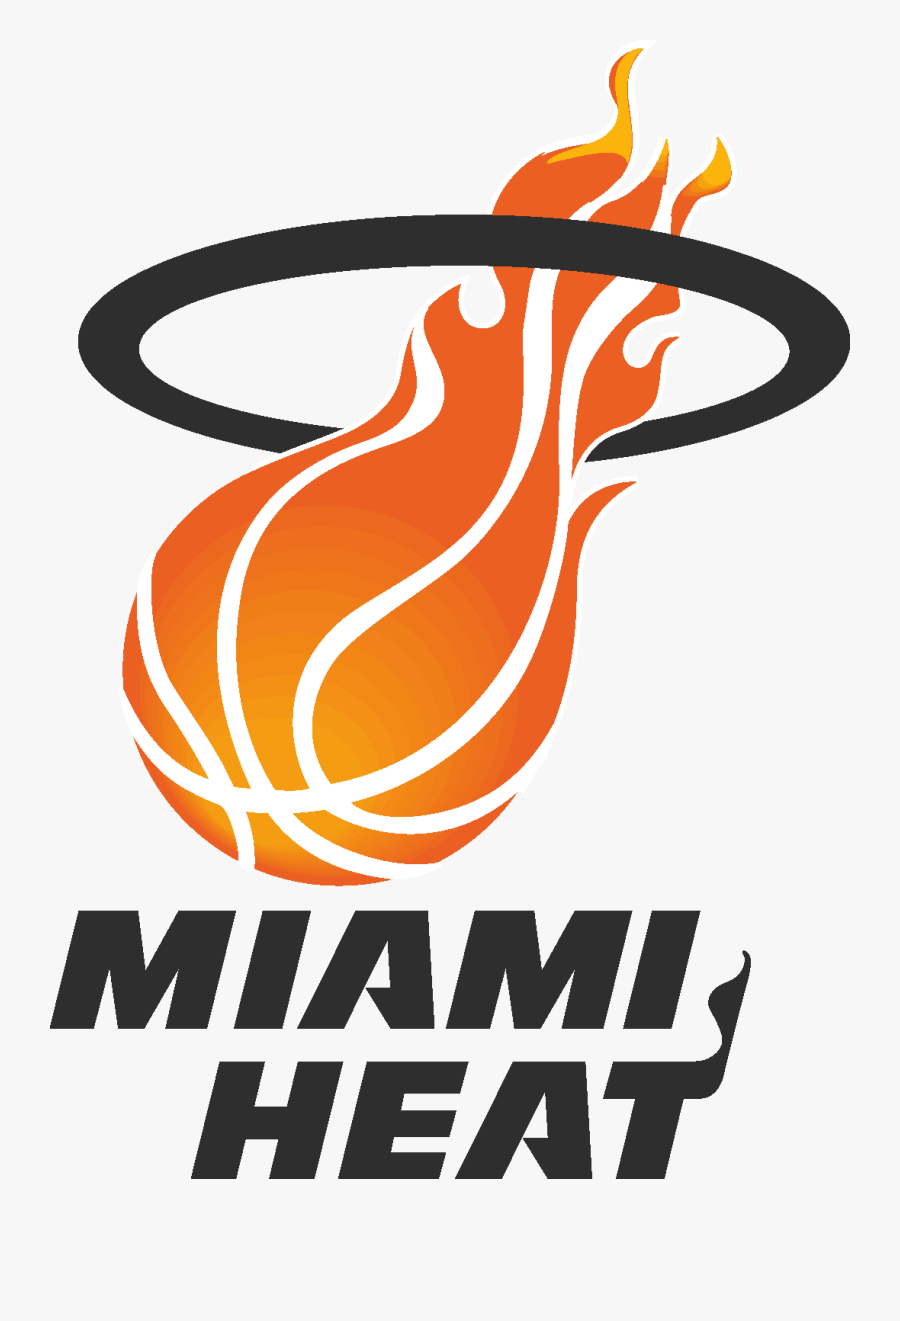 Heat Logo [miami Heat] Vector Eps Free Download, Logo, - Miami Heat Logo Png, Transparent Clipart